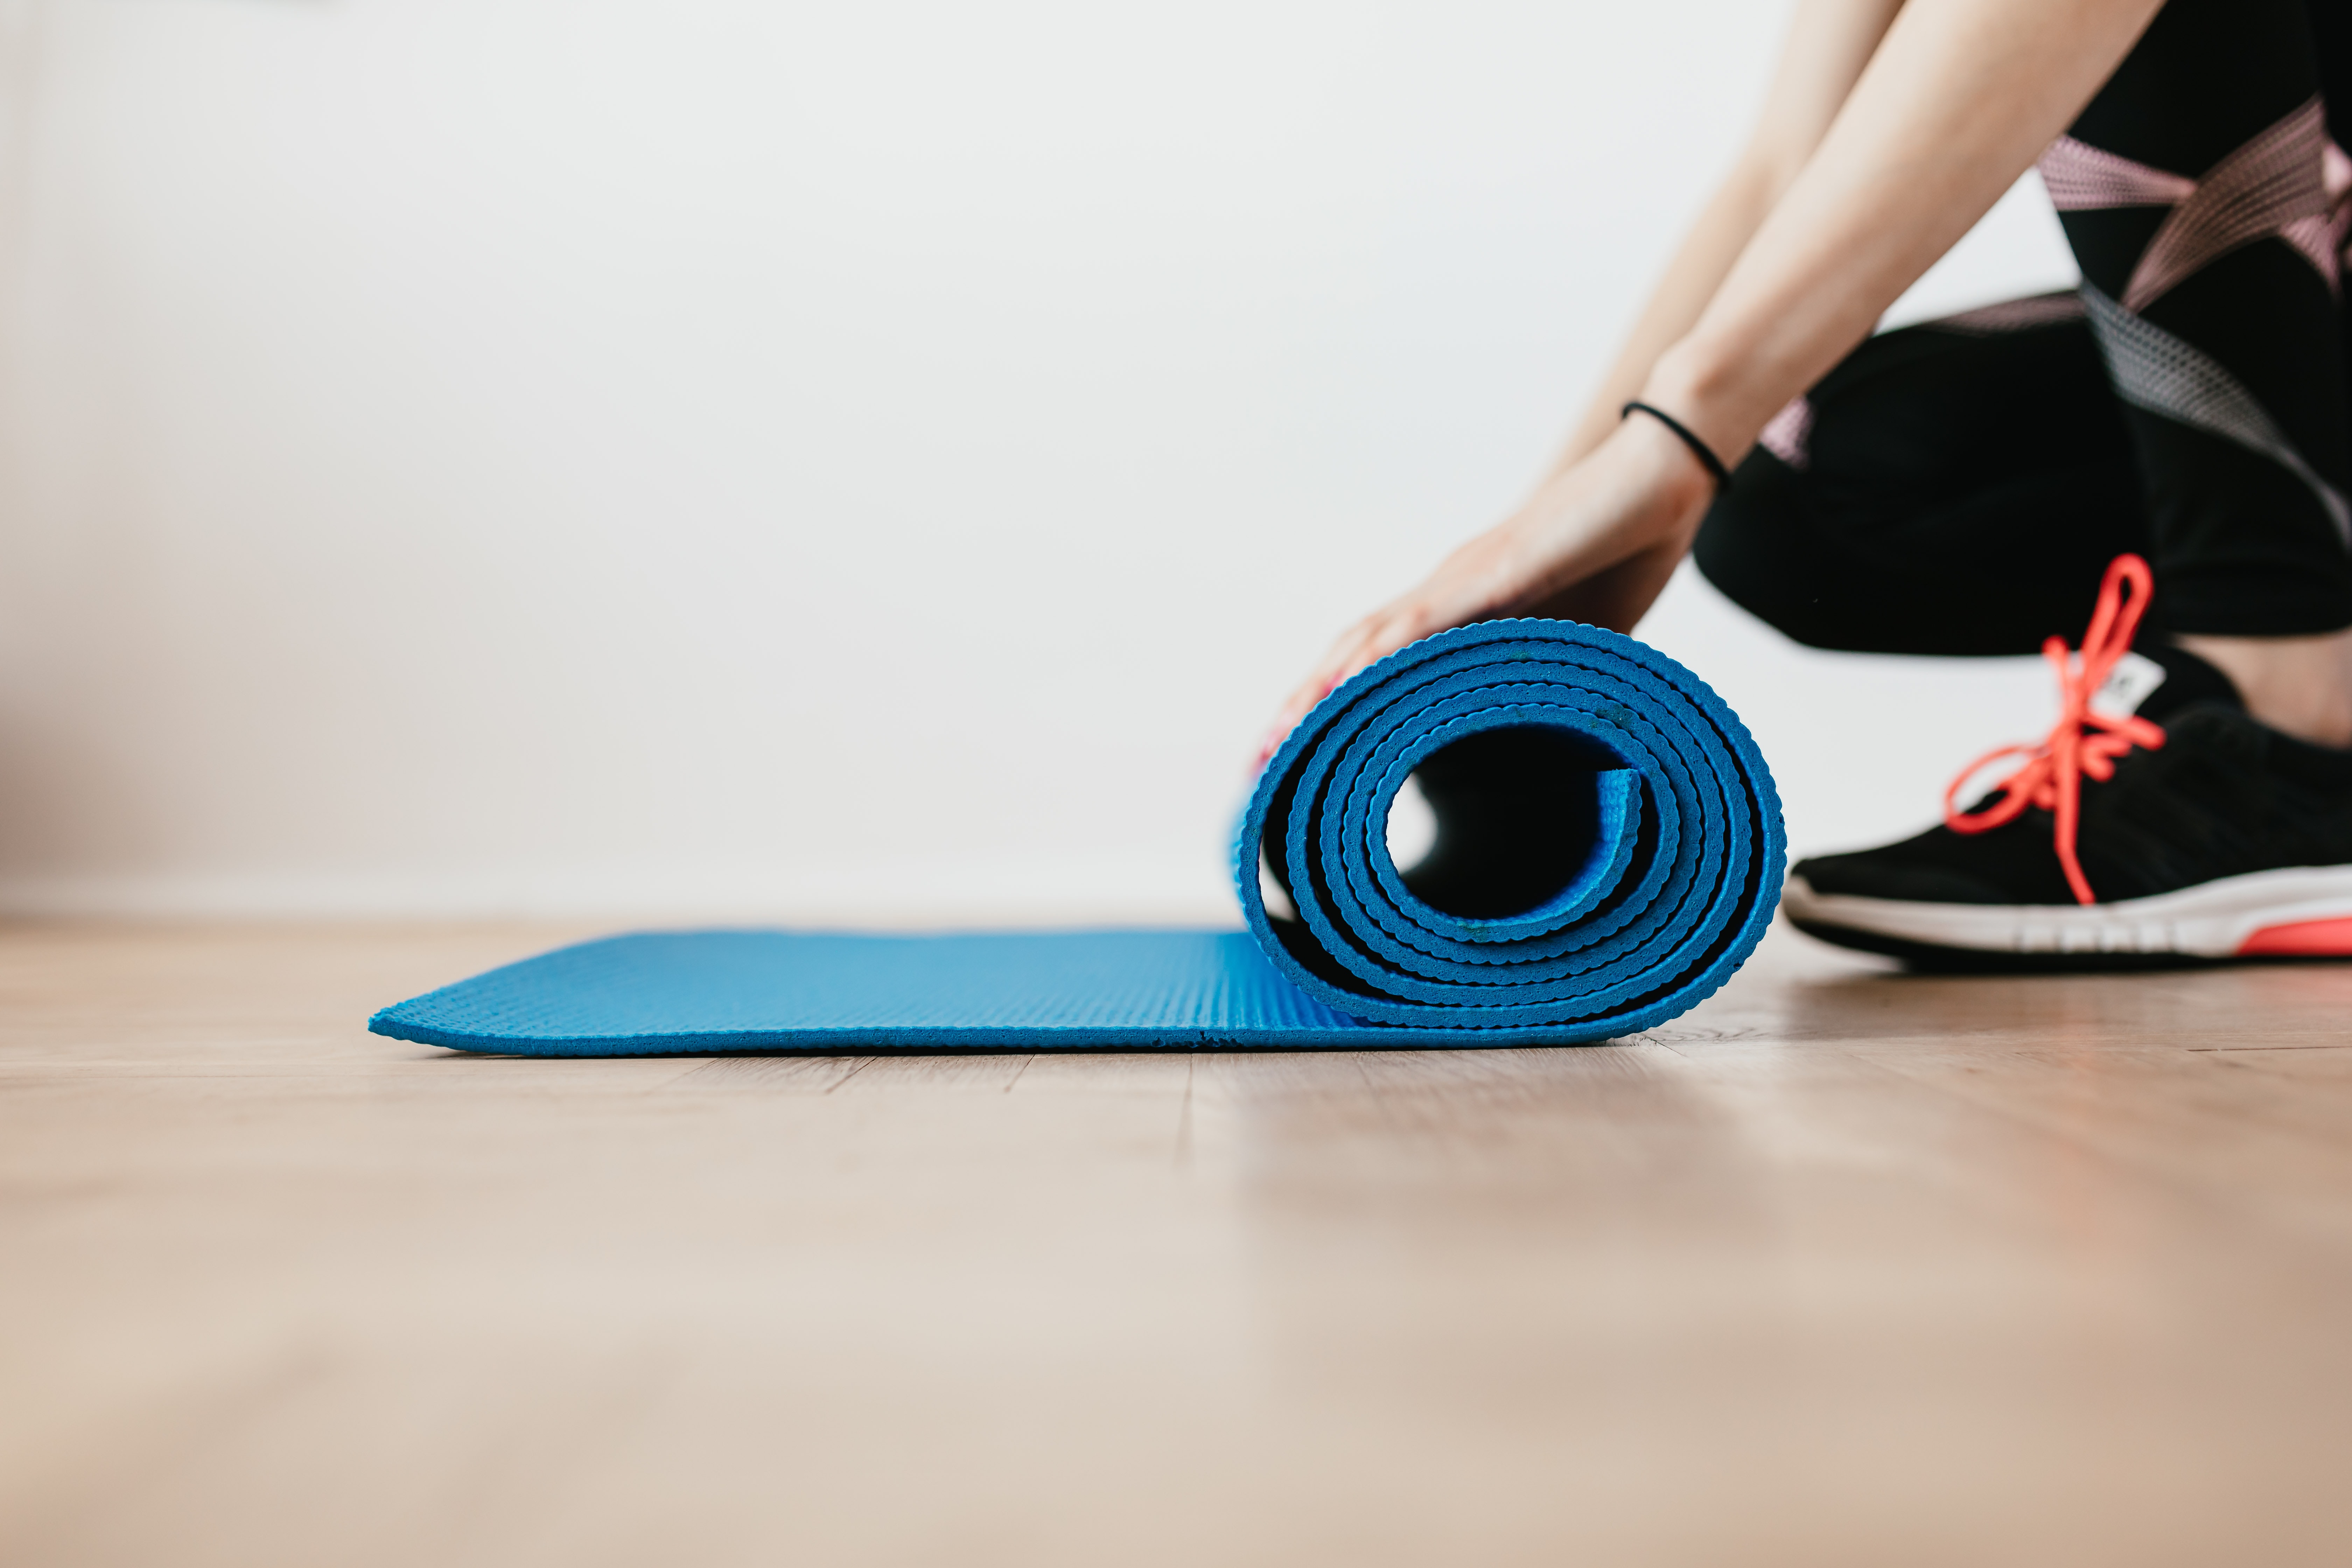 a woman wearing running shoes unrolls a yoga mat